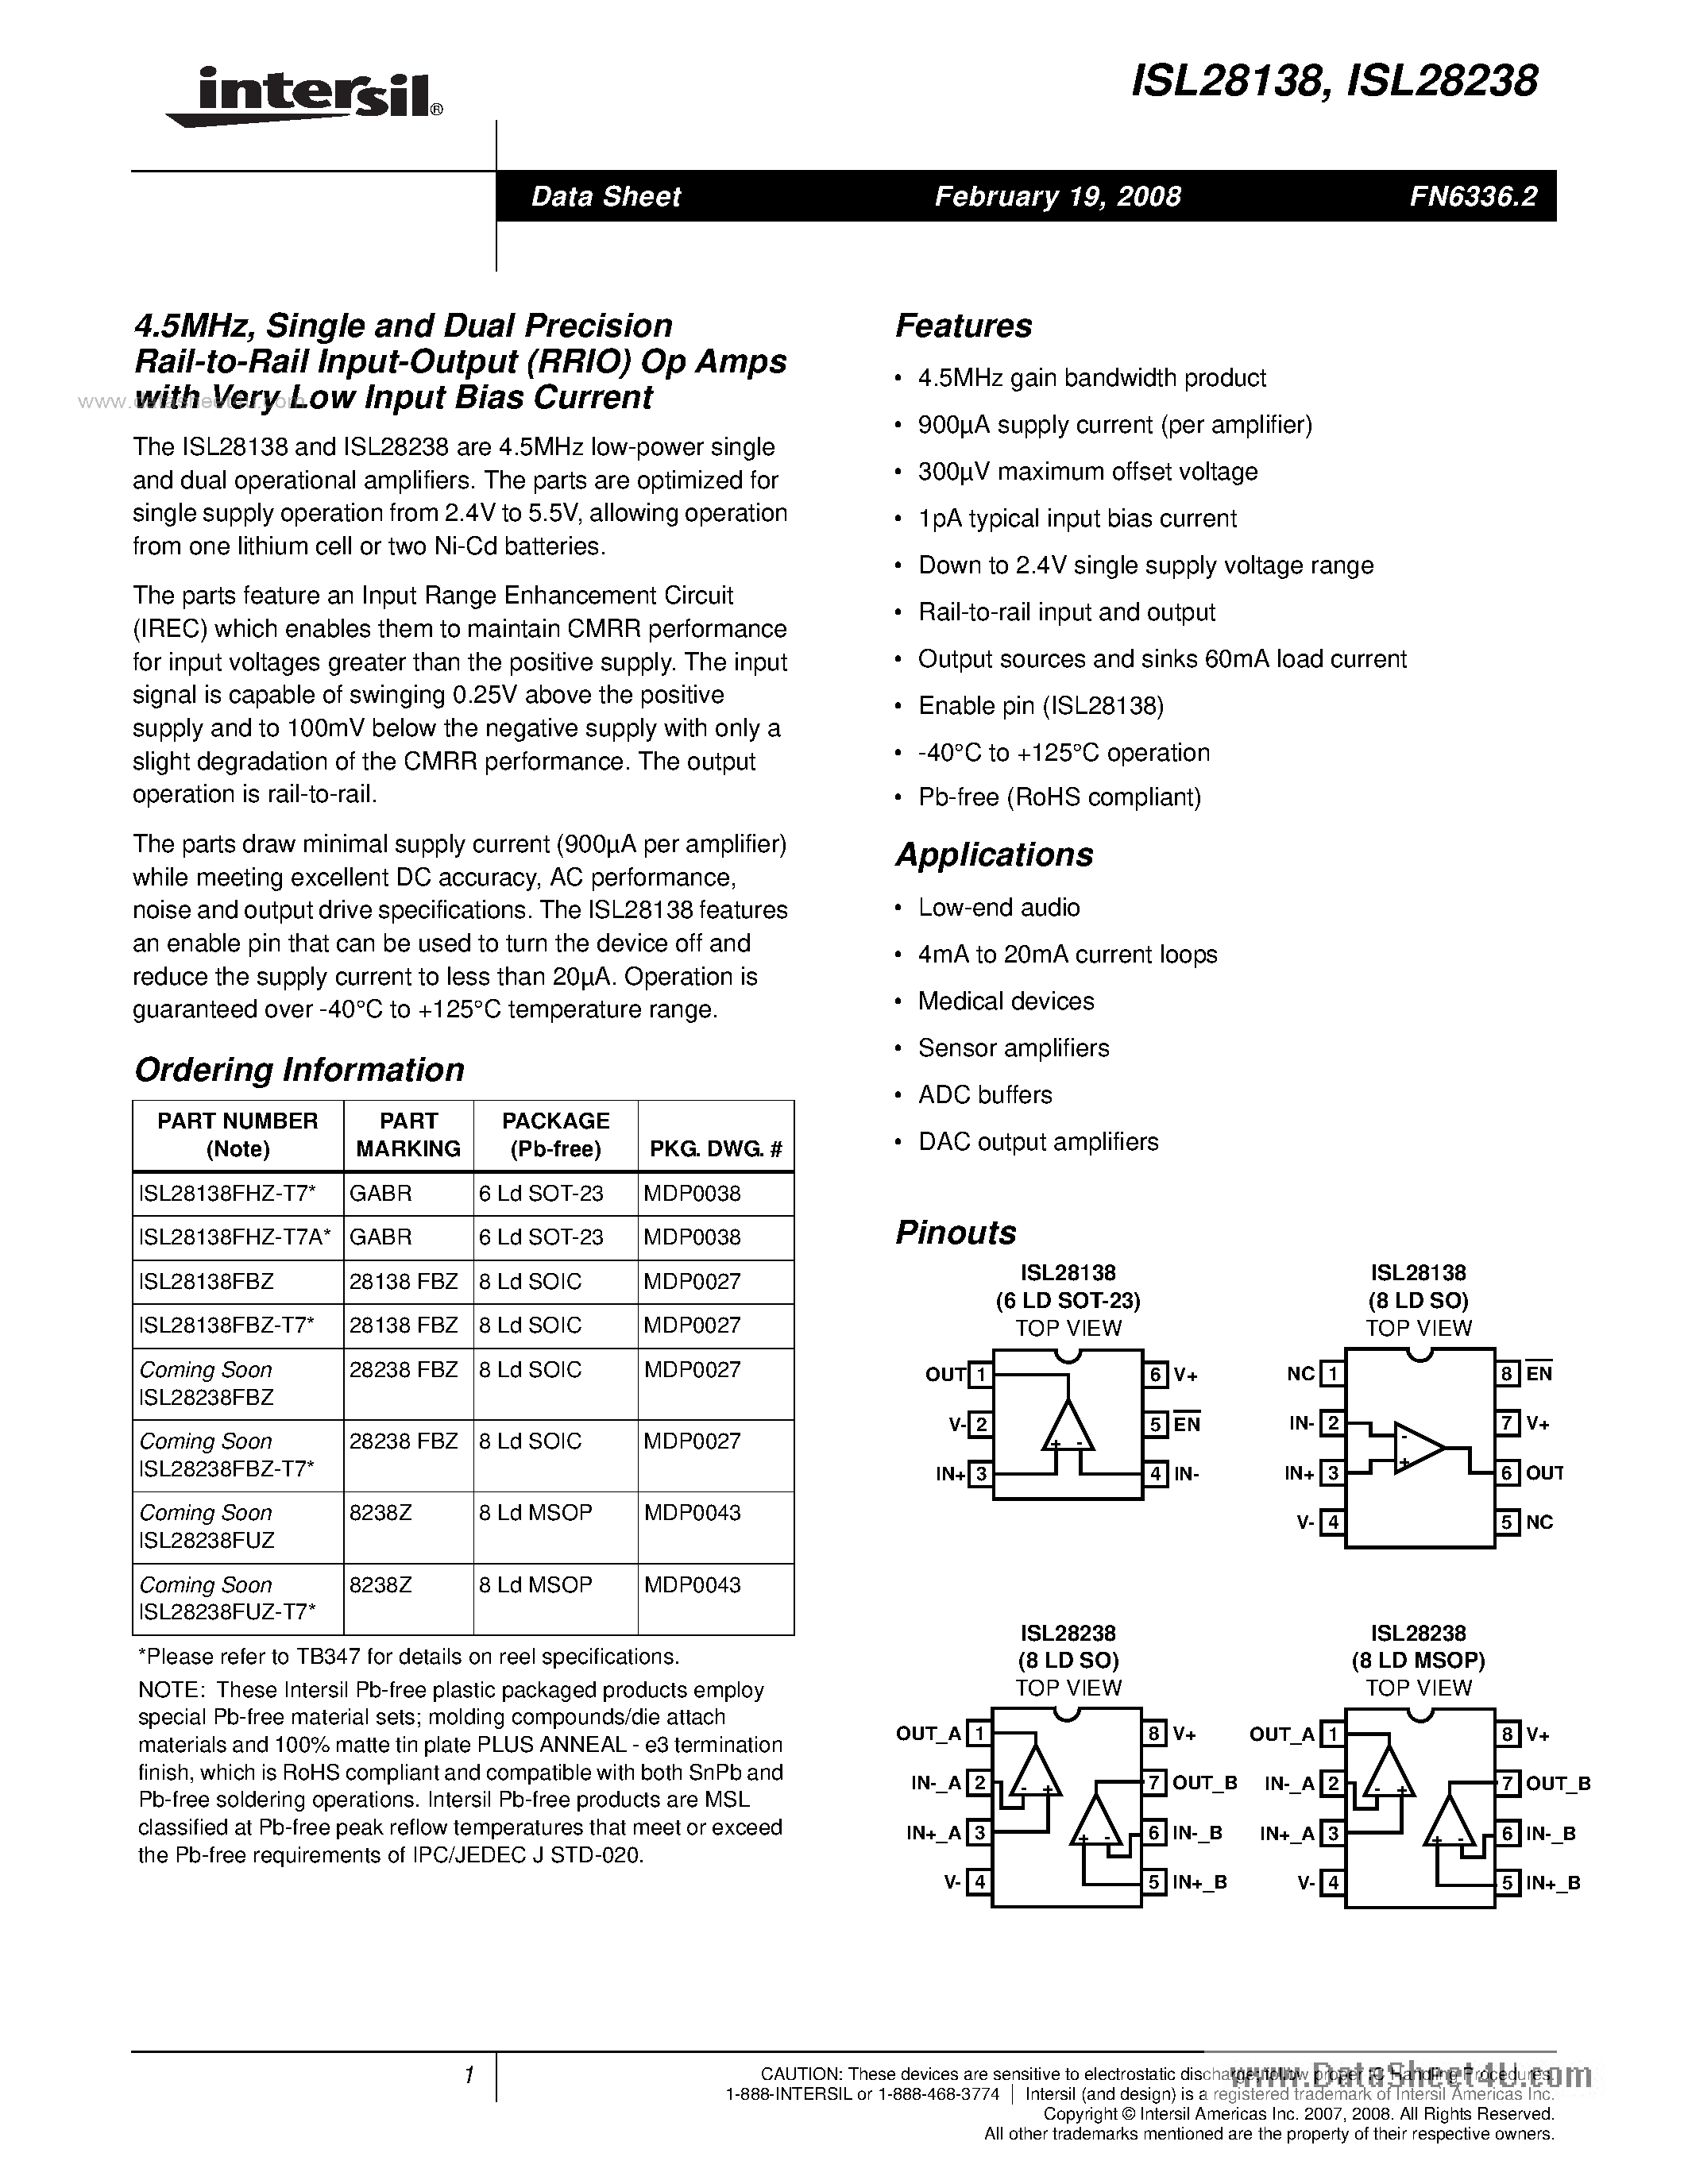 Datasheet ISL28238 - (ISL28138 / ISL28238) Single and Dual Precision Rail-to-Rail Input-Output (RRIO) Op Amps page 1